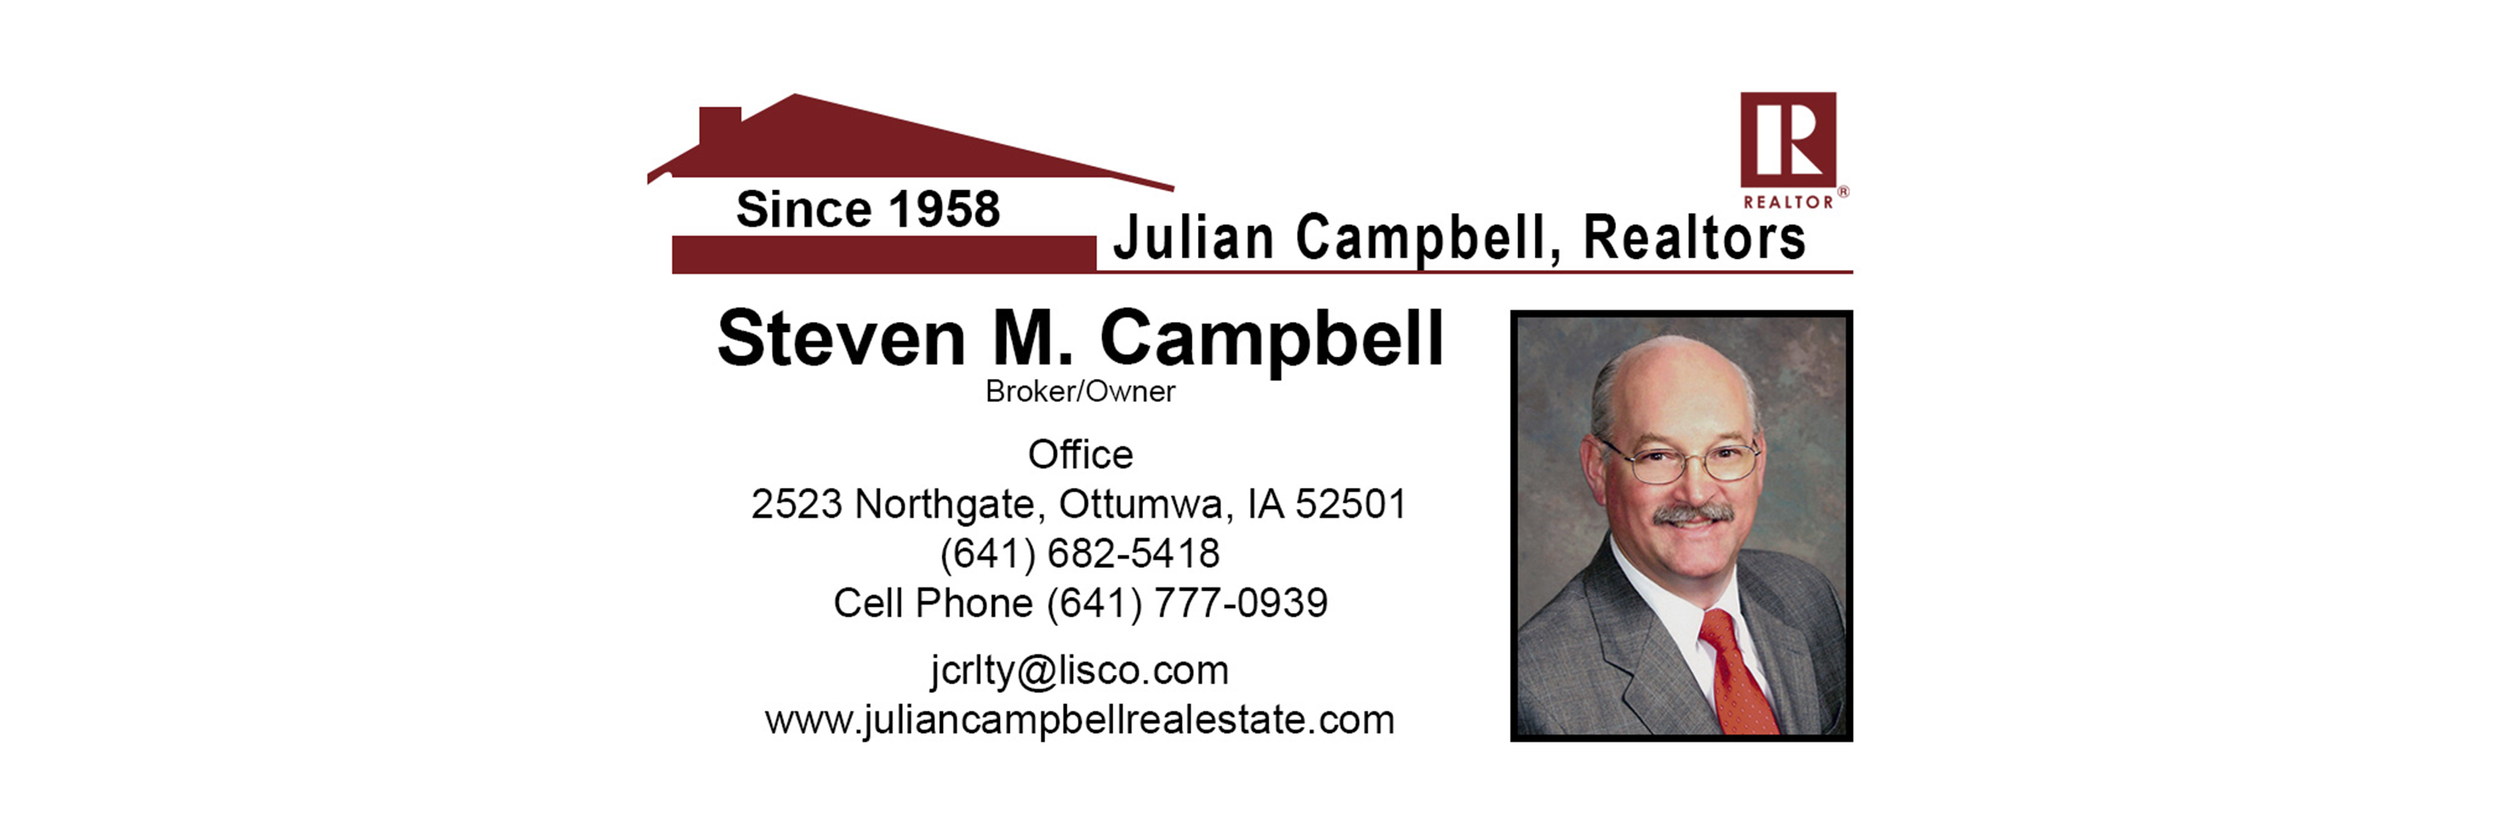 Steven M. Campbell b-card copy.png